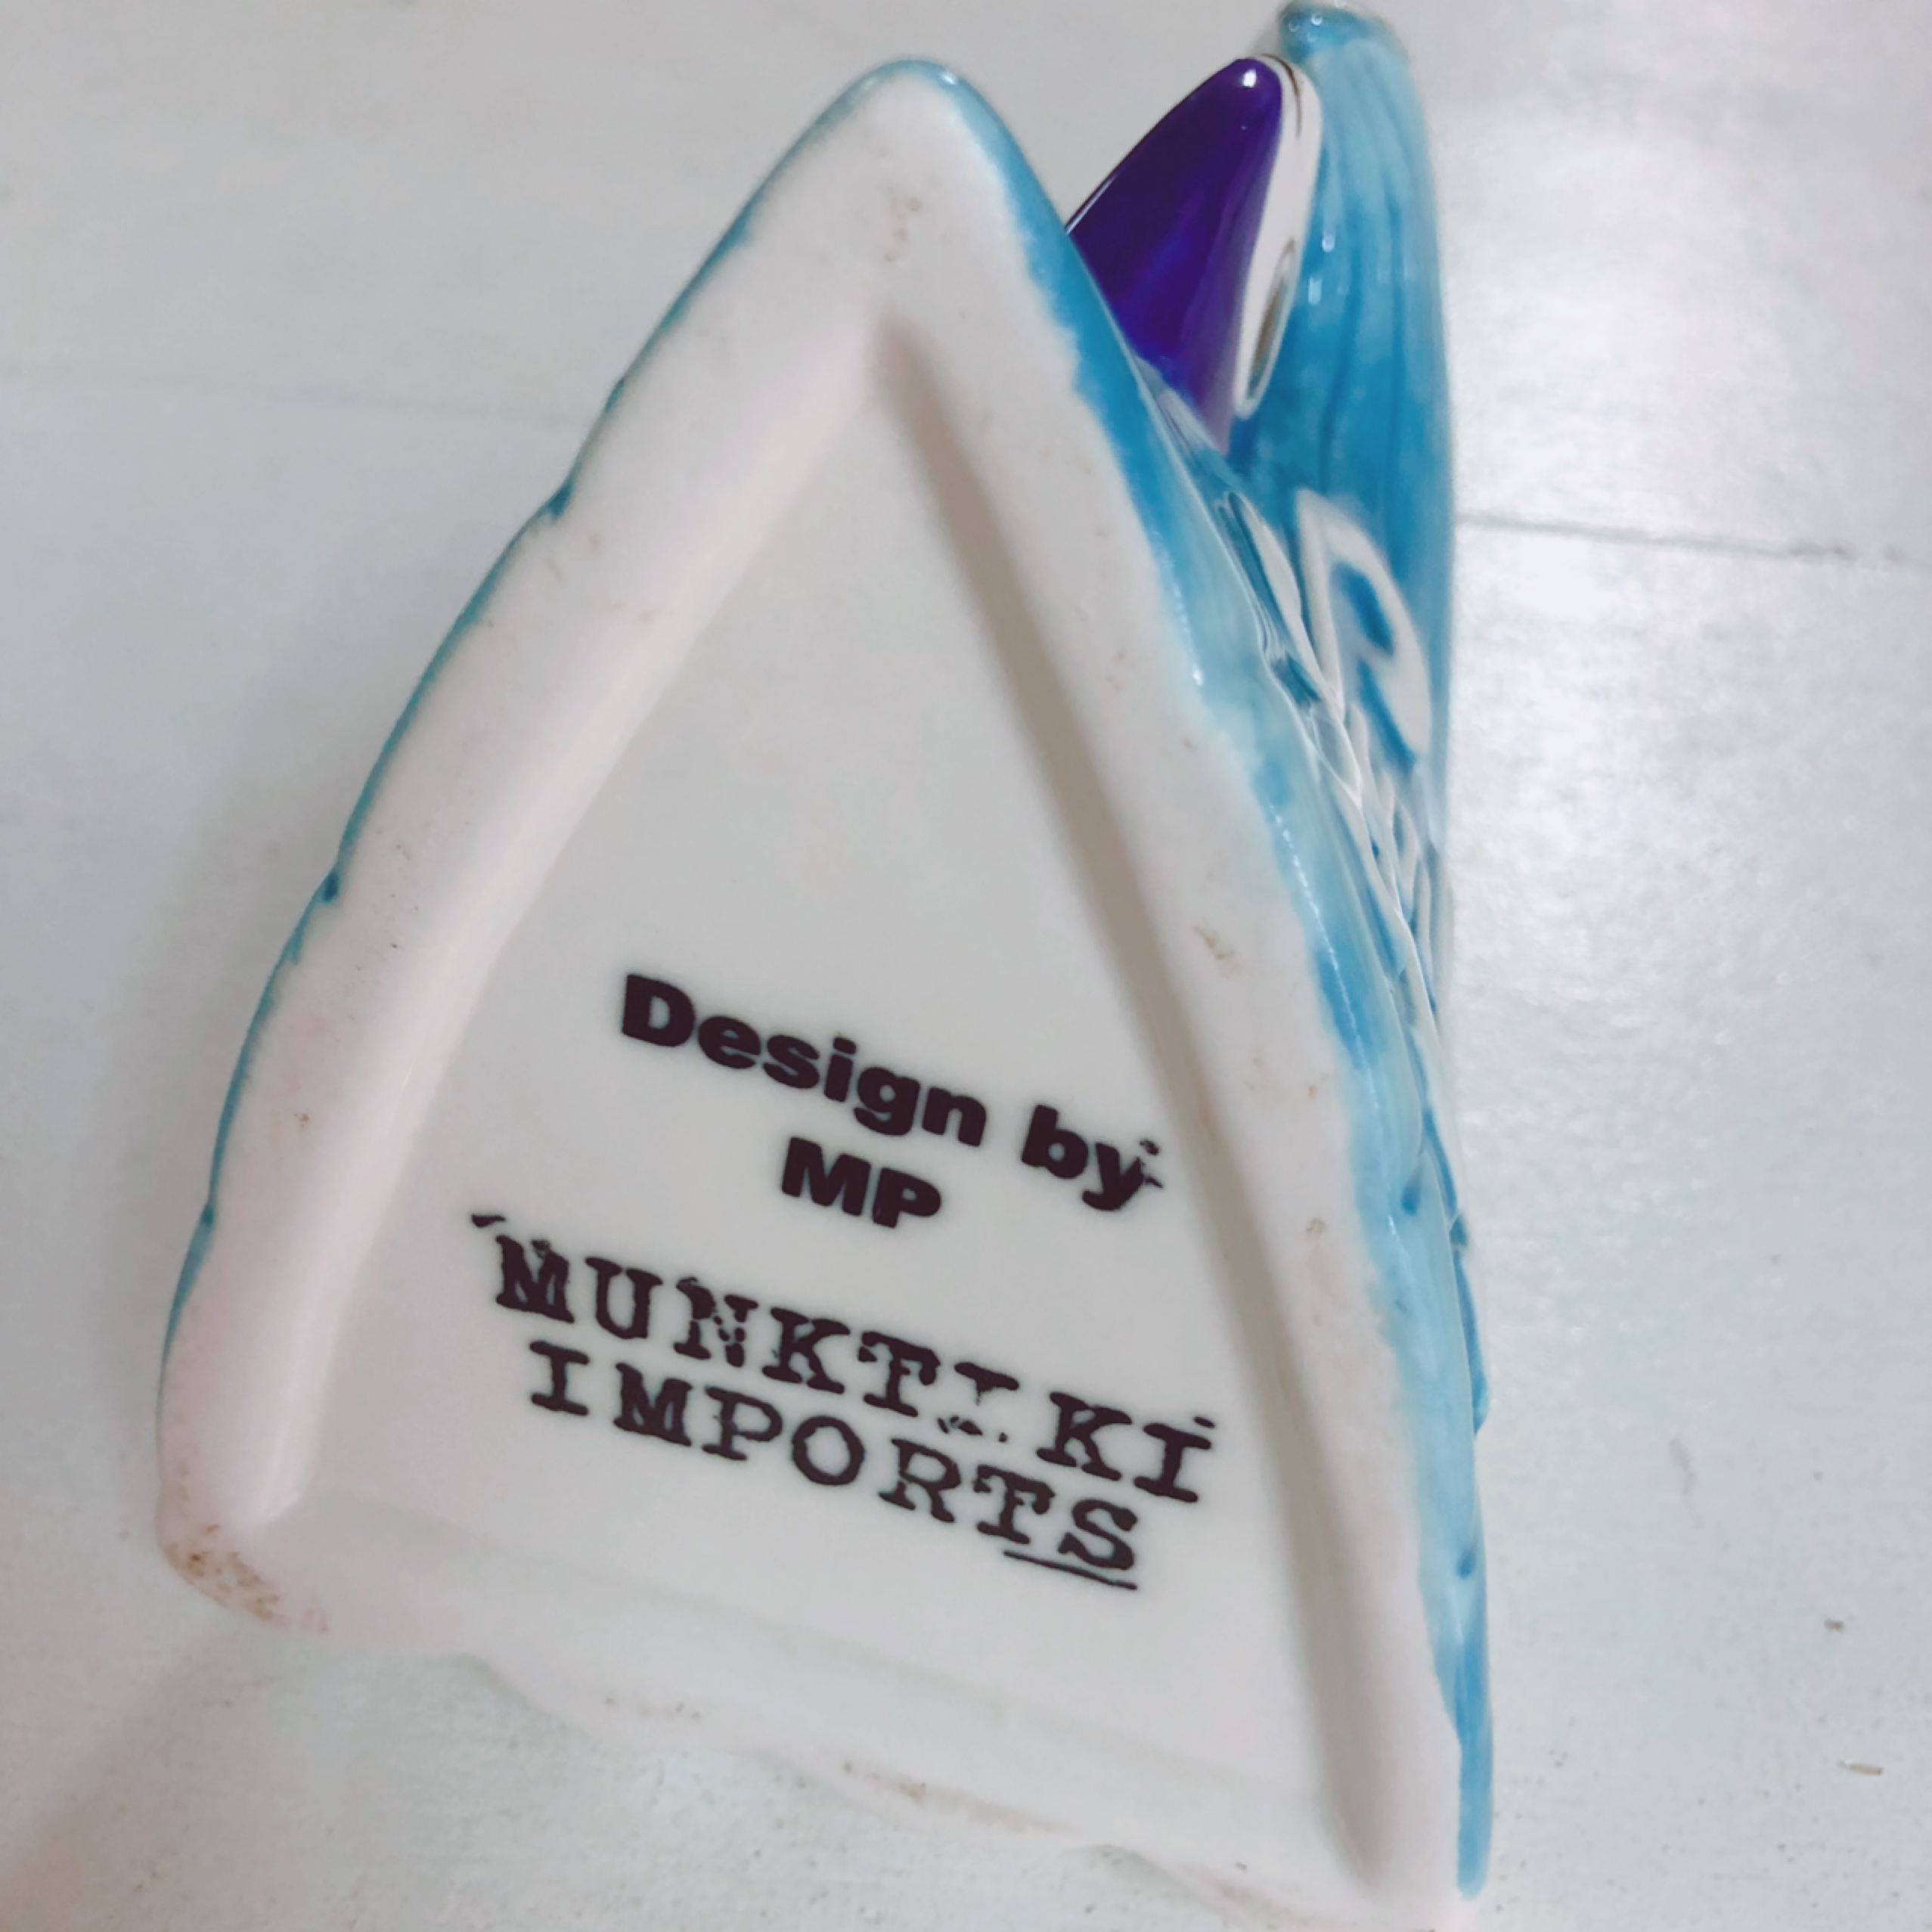 Munktiki import Surf Bob mug